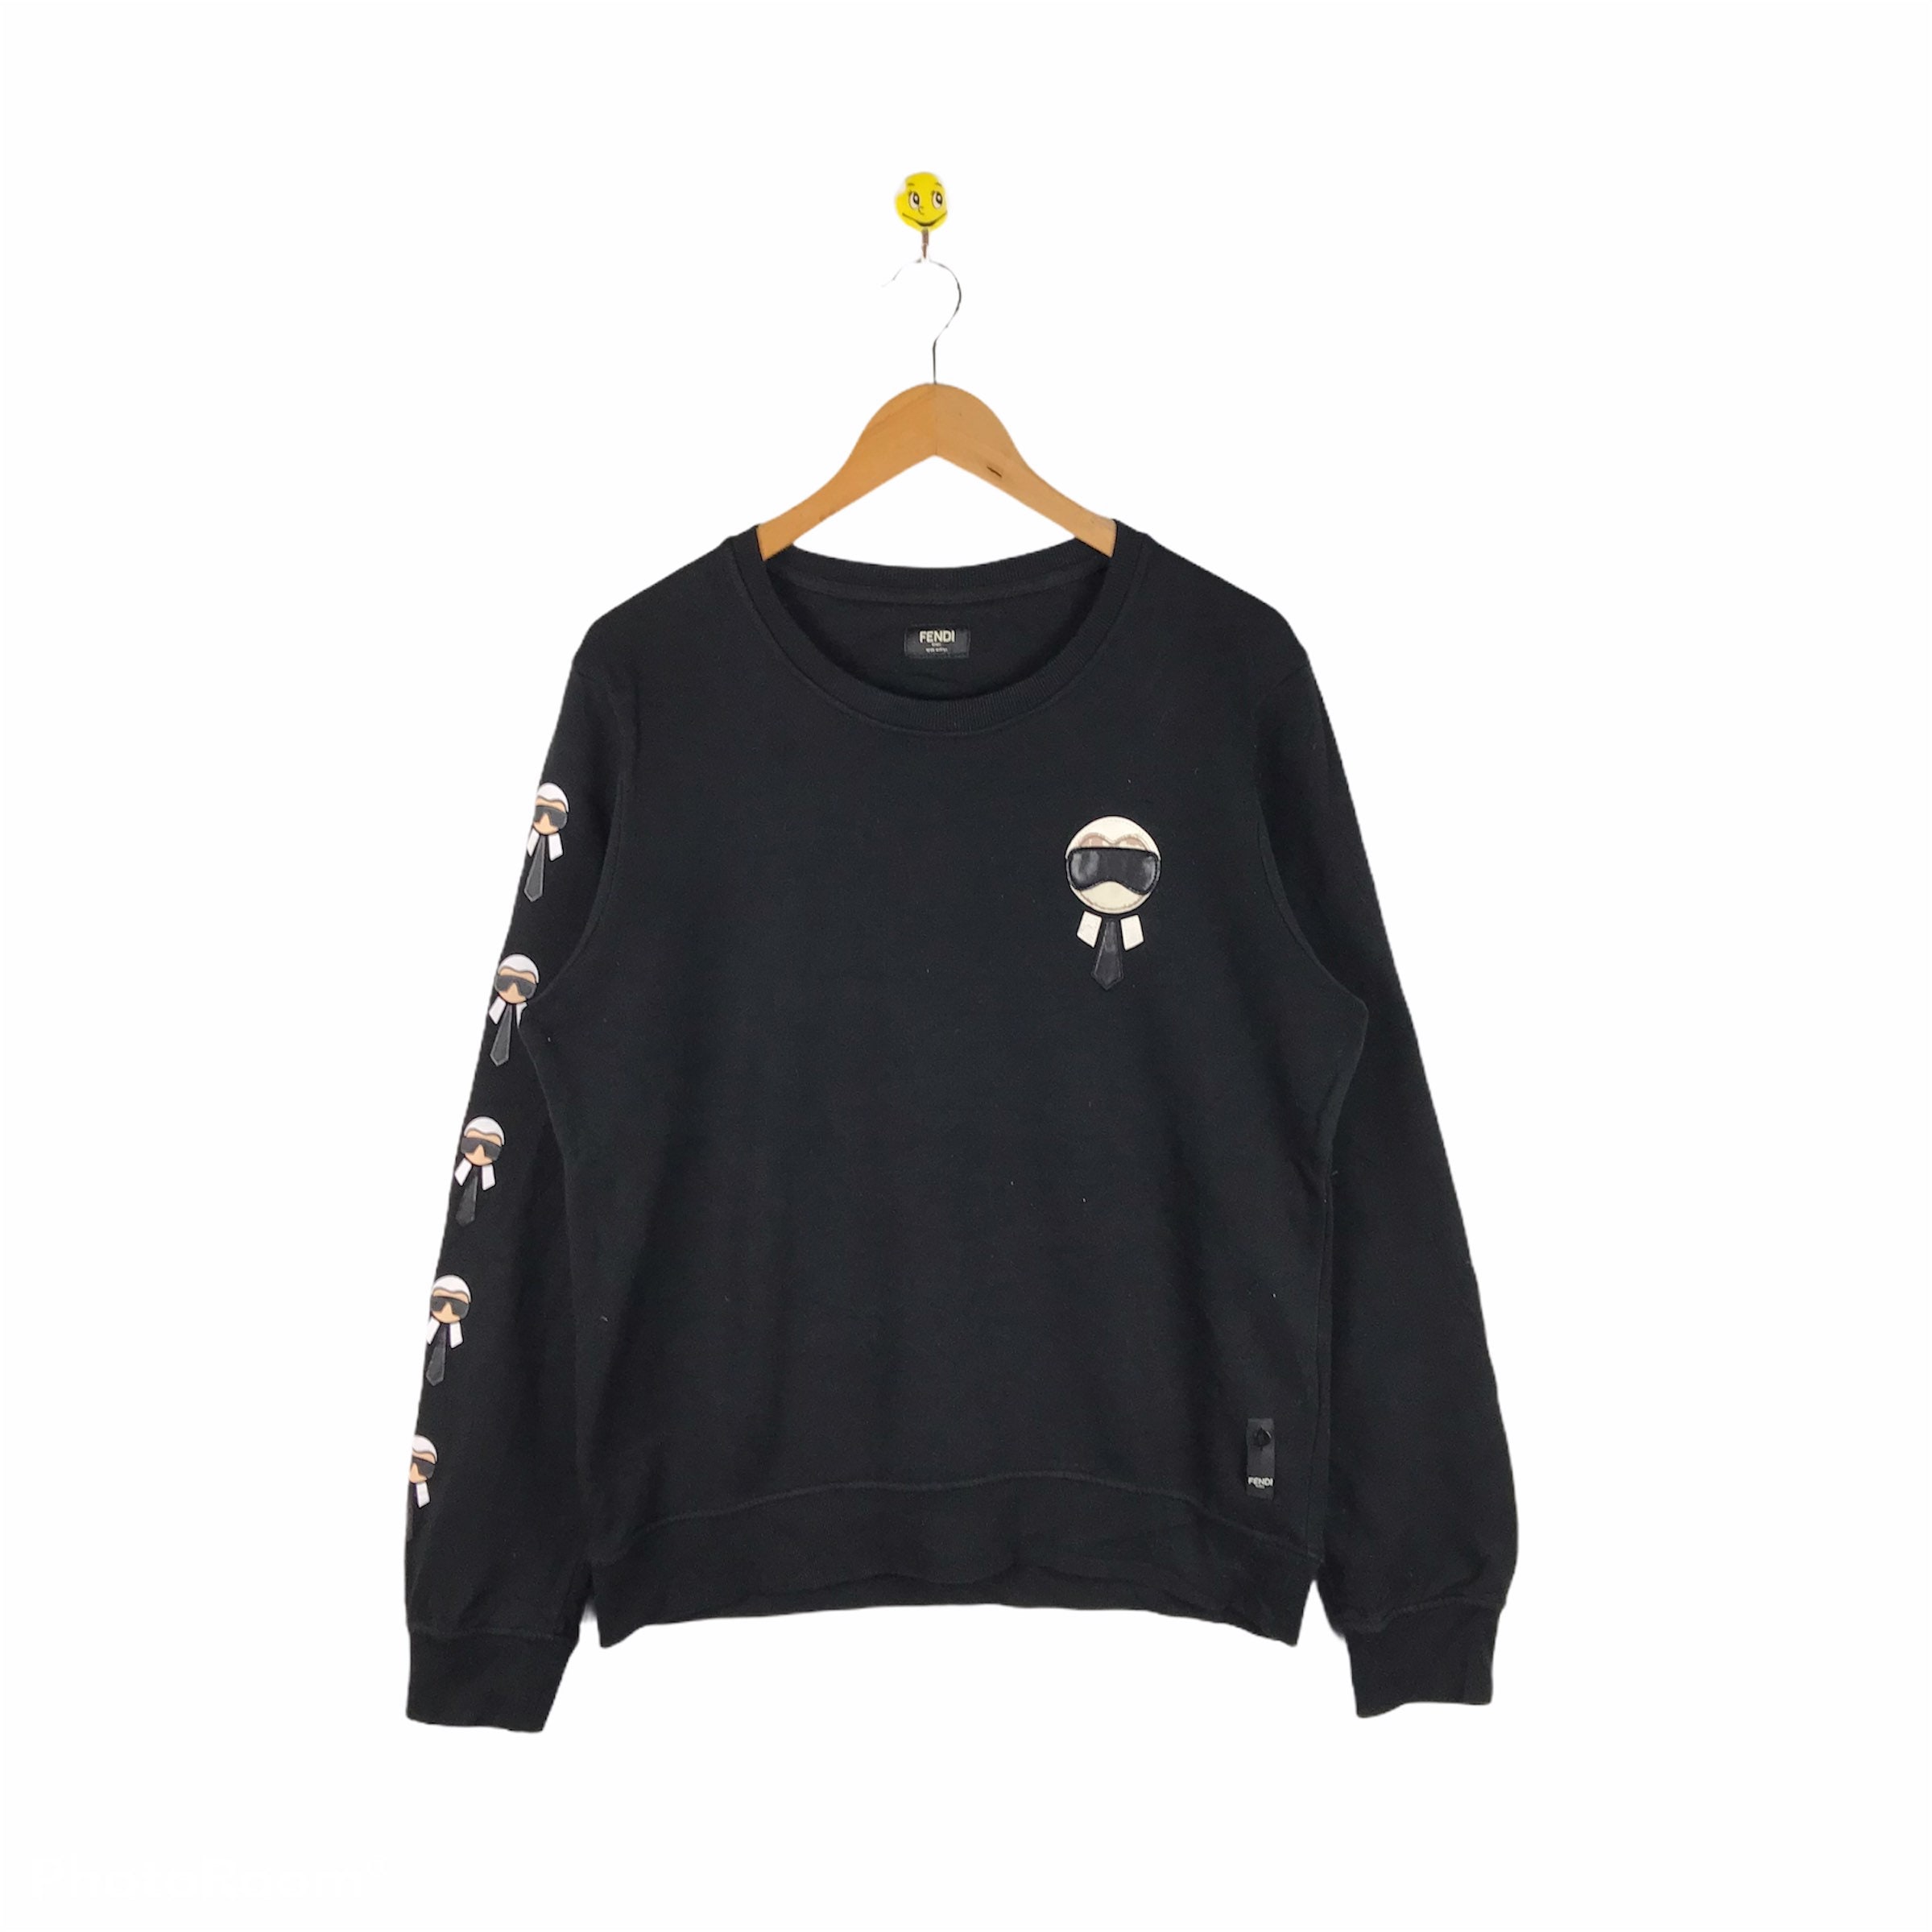 Rare Fendi Sweatshirt / Fendi Karl Lover / Karl Lagerfeld